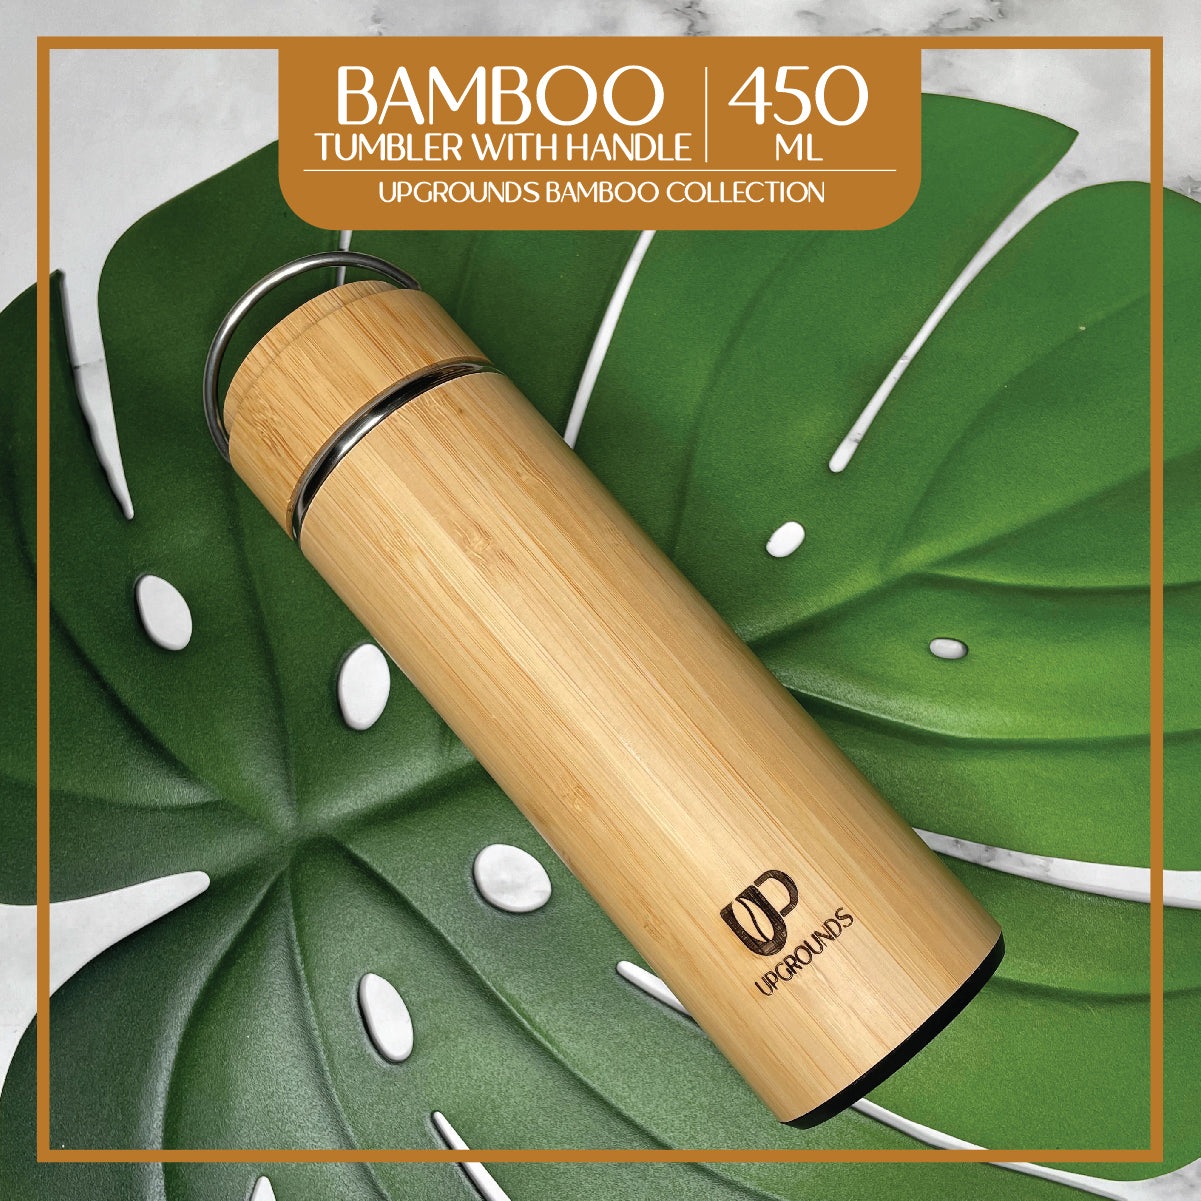 Bamboo Tumbler with Handle (450ml) | Upgrounds